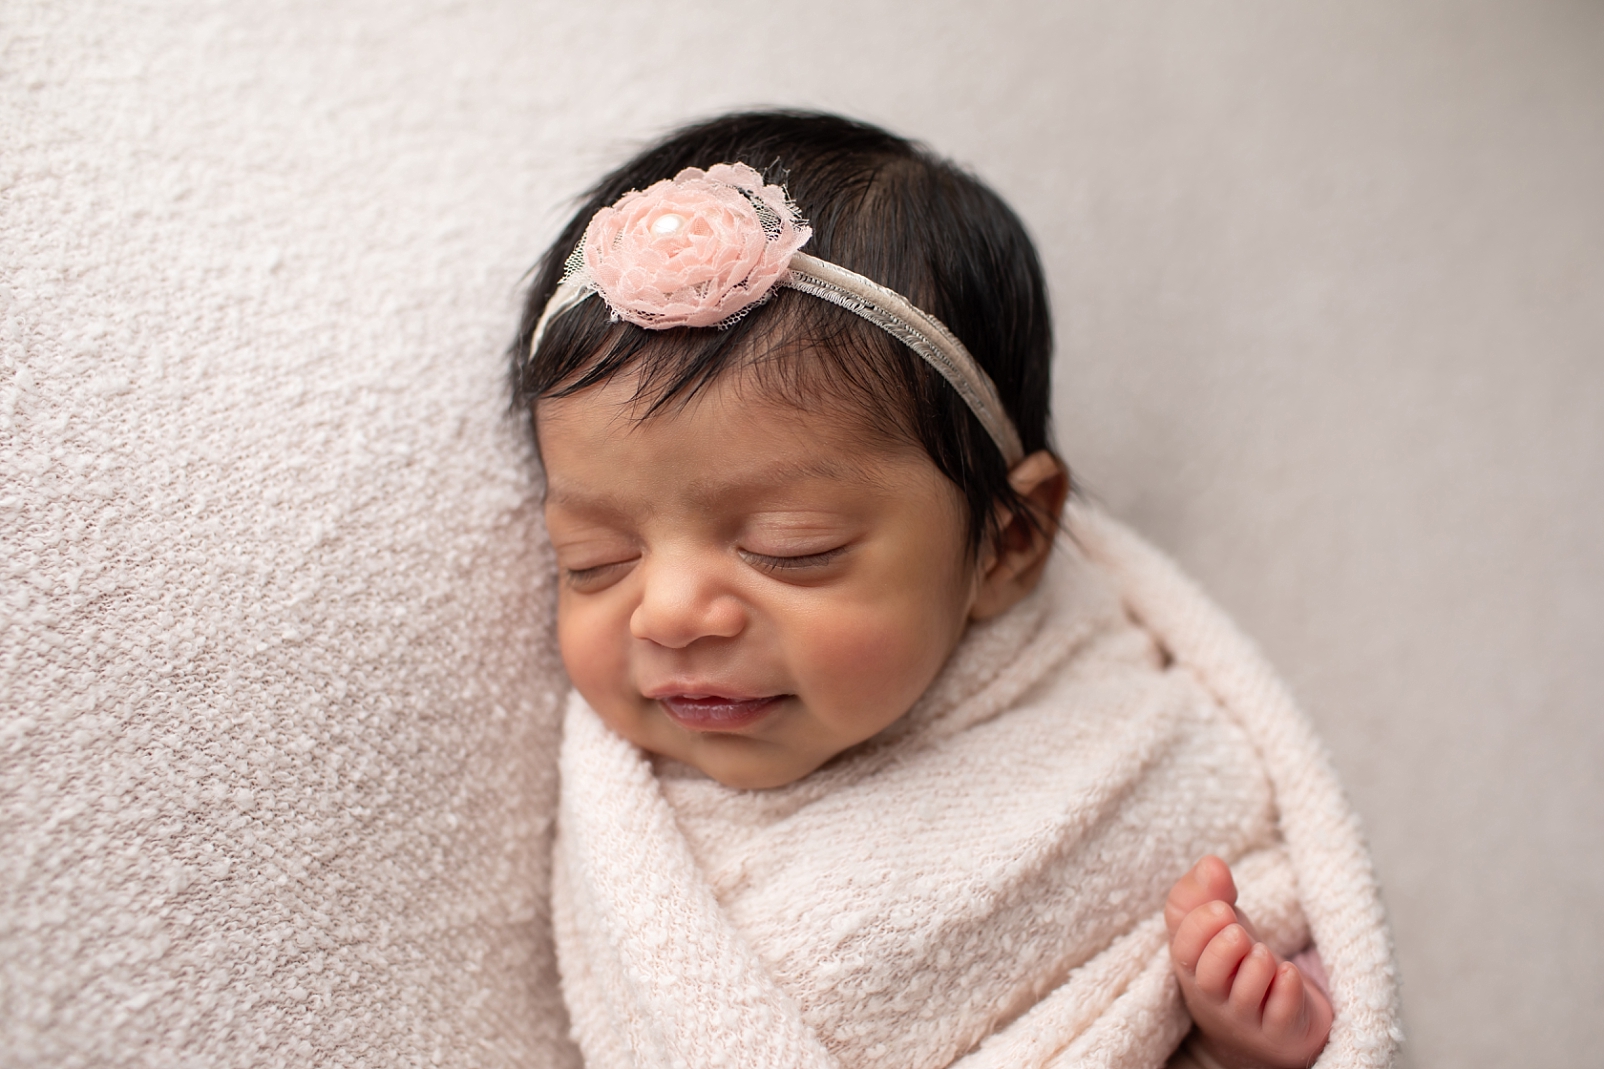 newborn baby smiling with pink flower headband